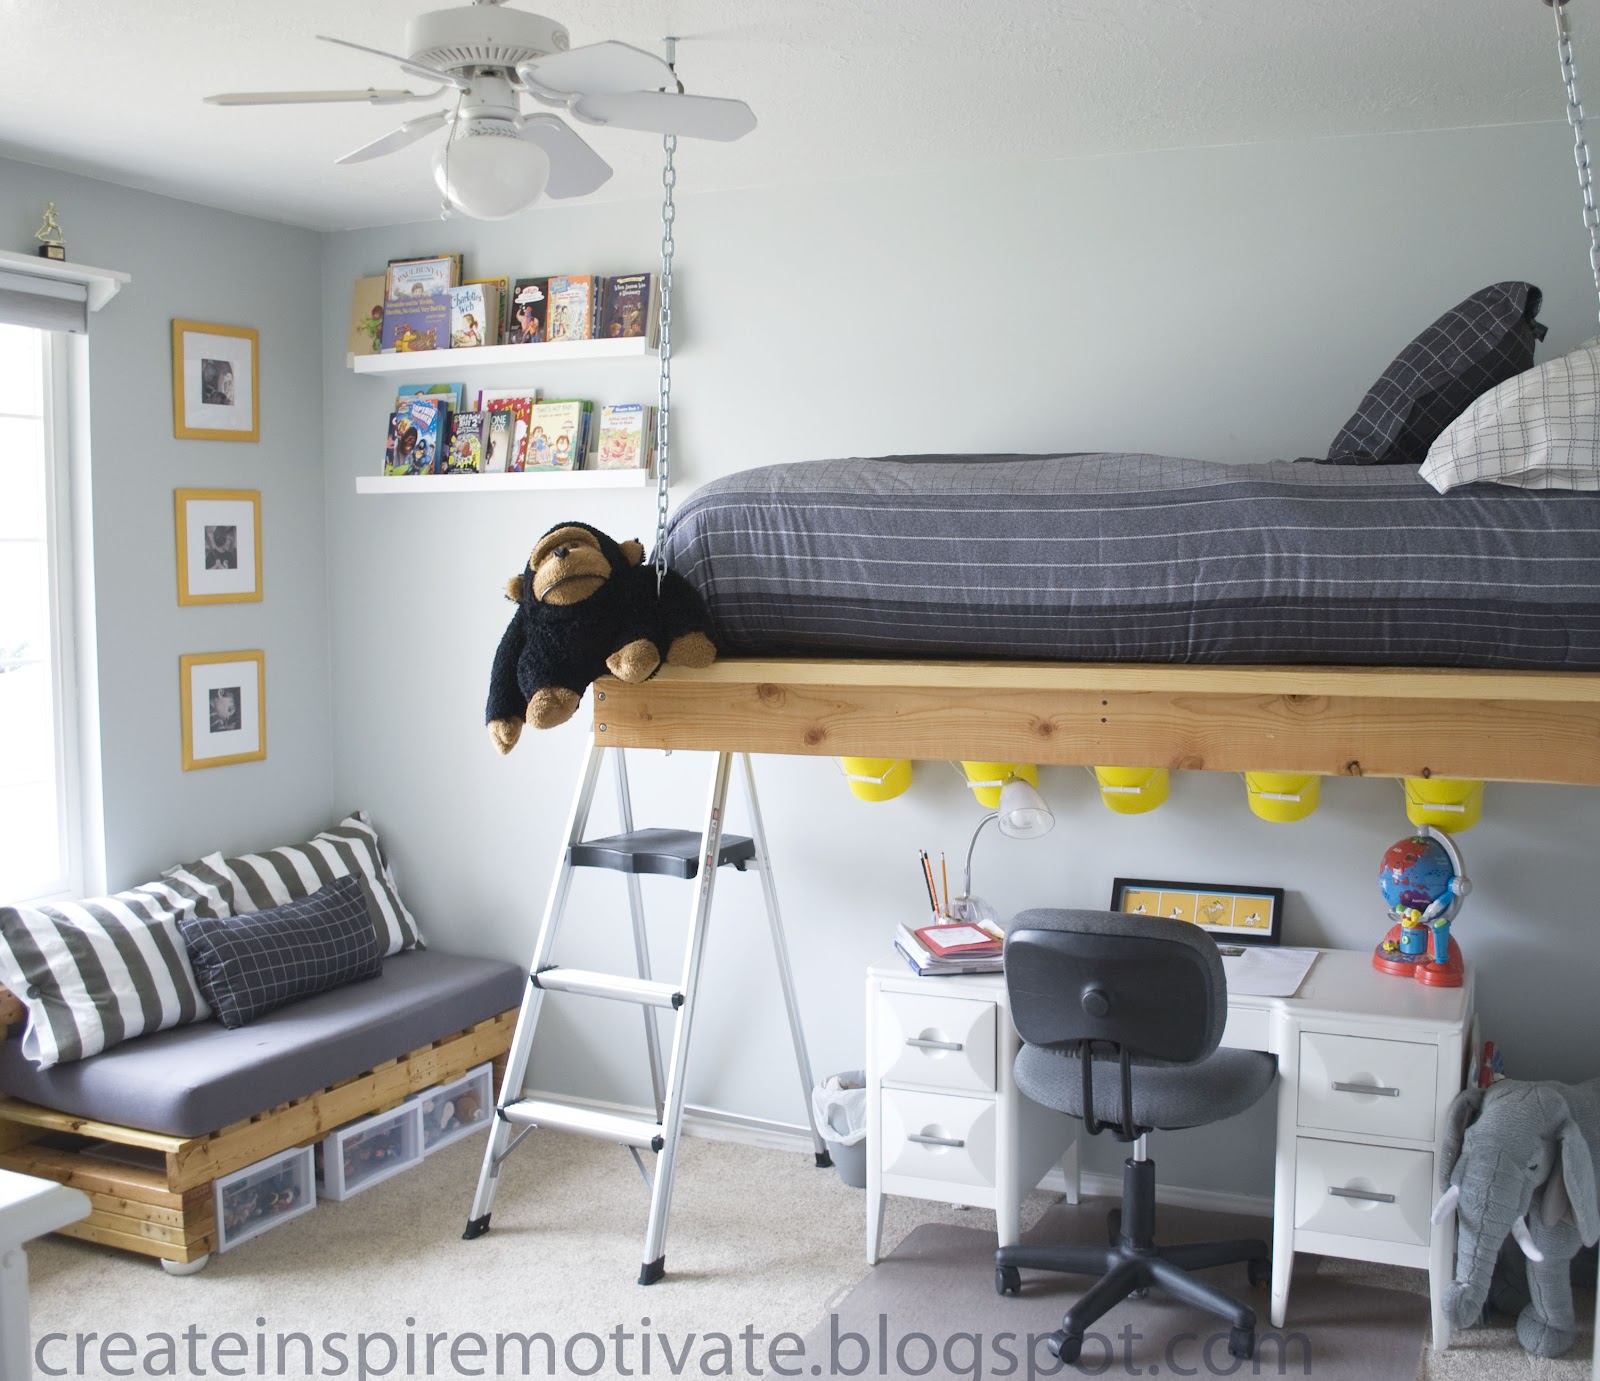 createinspiremotivate: C's Room Part 1- Hanging Bed